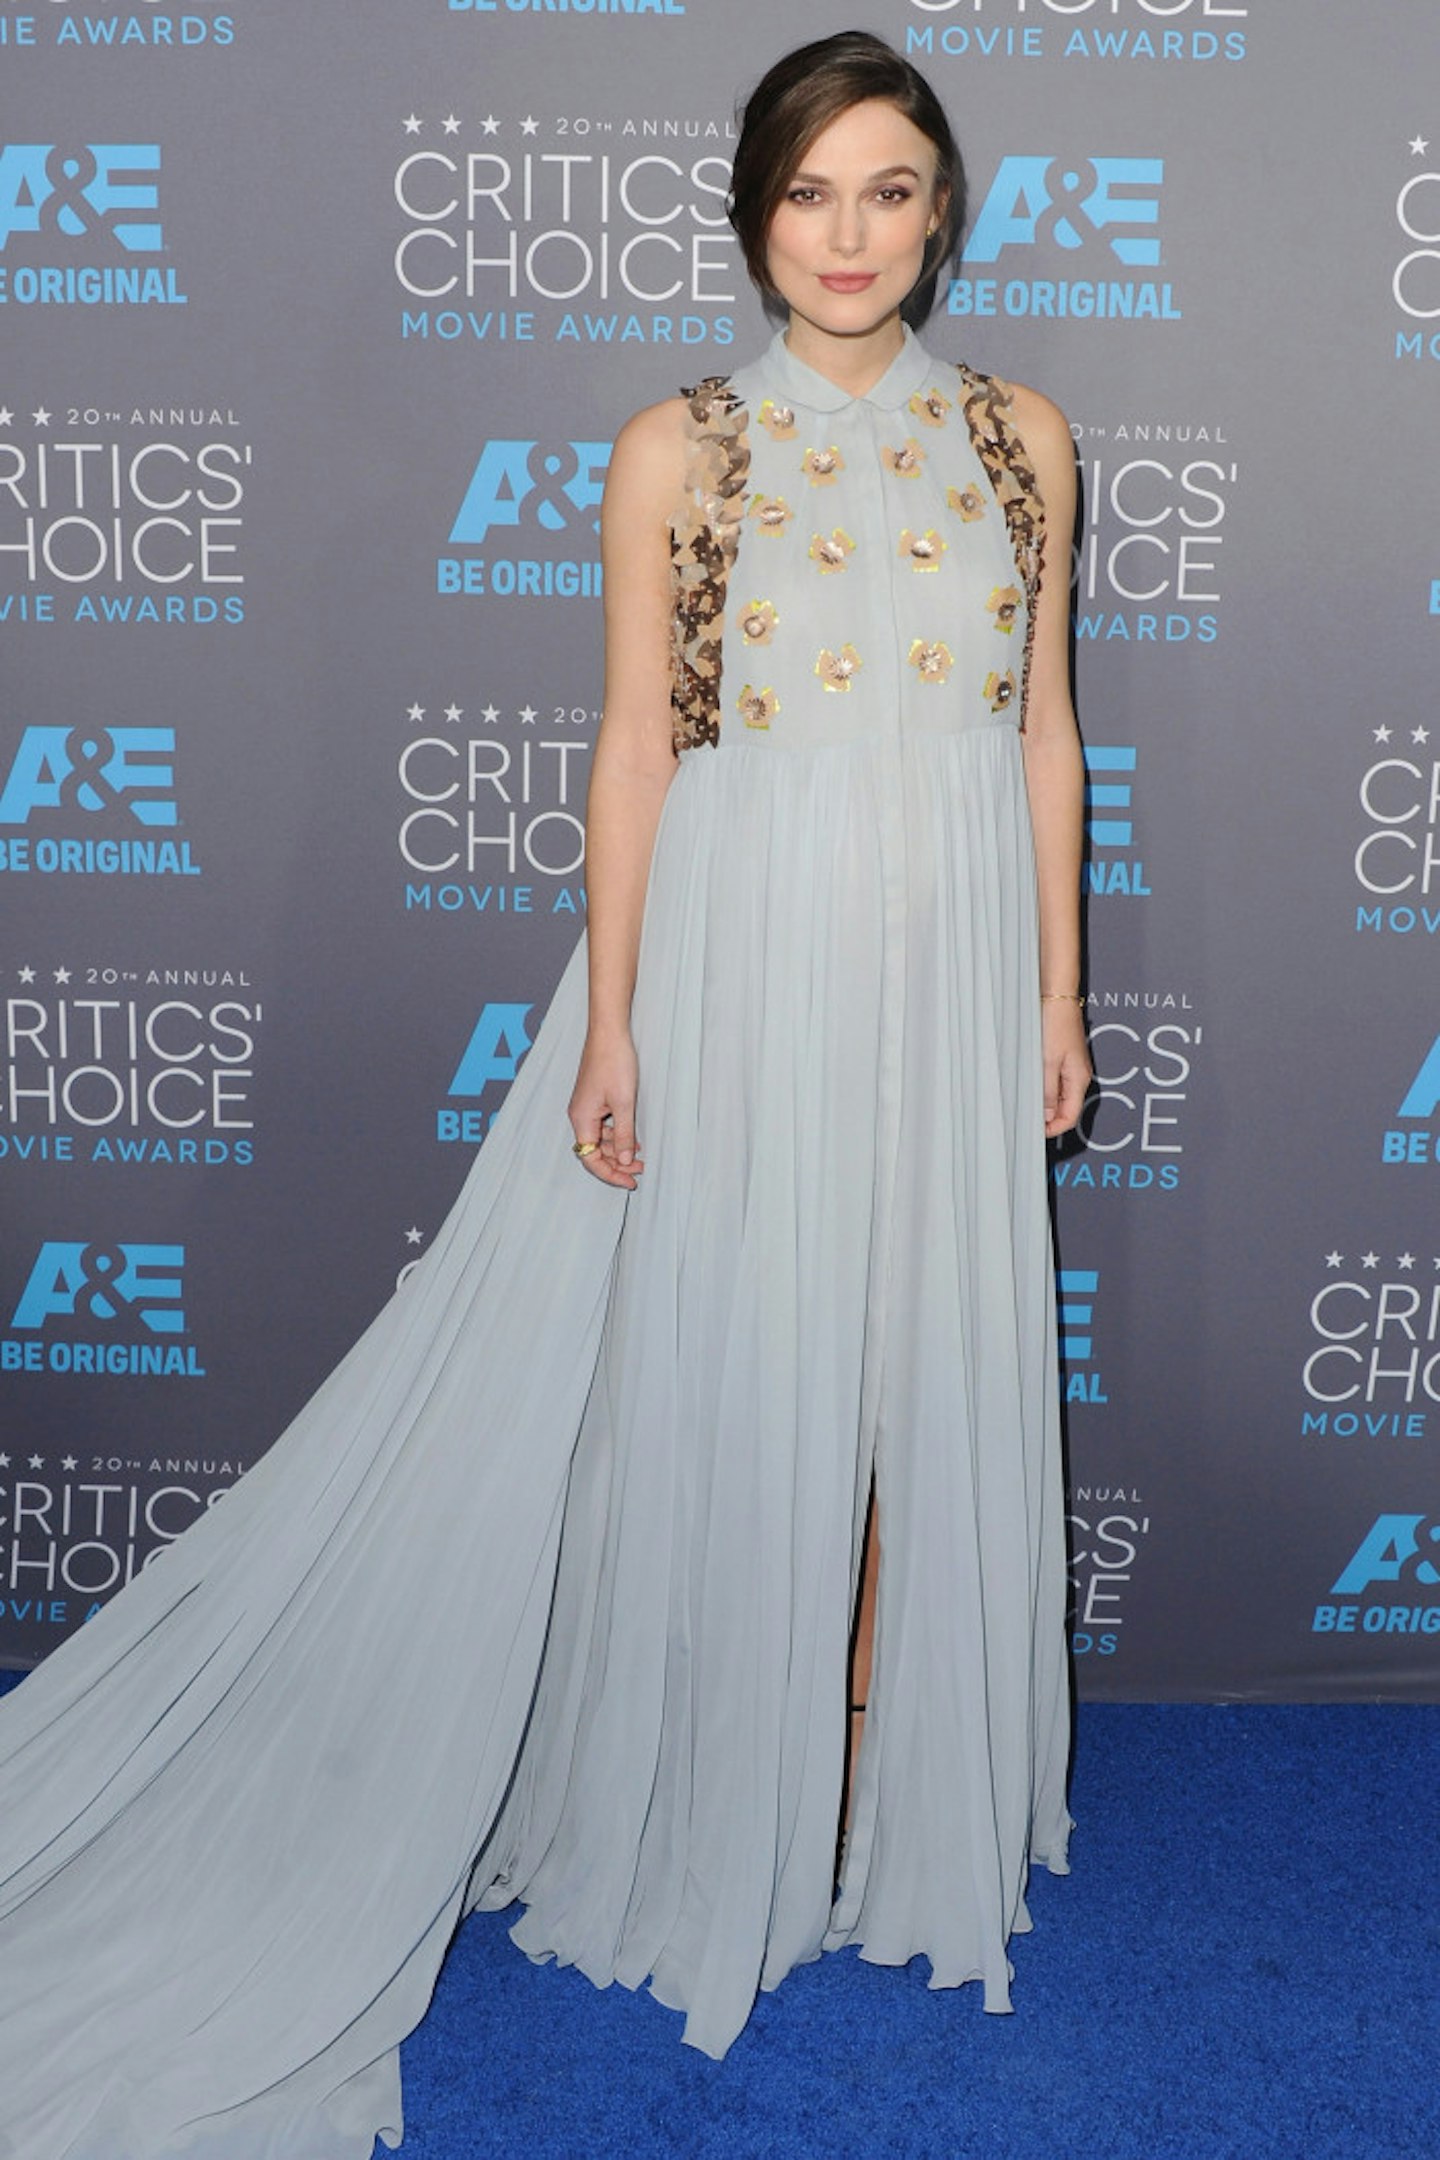 Keira Knightley at the 20th Annual Critics' Choice Movie Awards at Hollywood Palladium, 15 January 2015